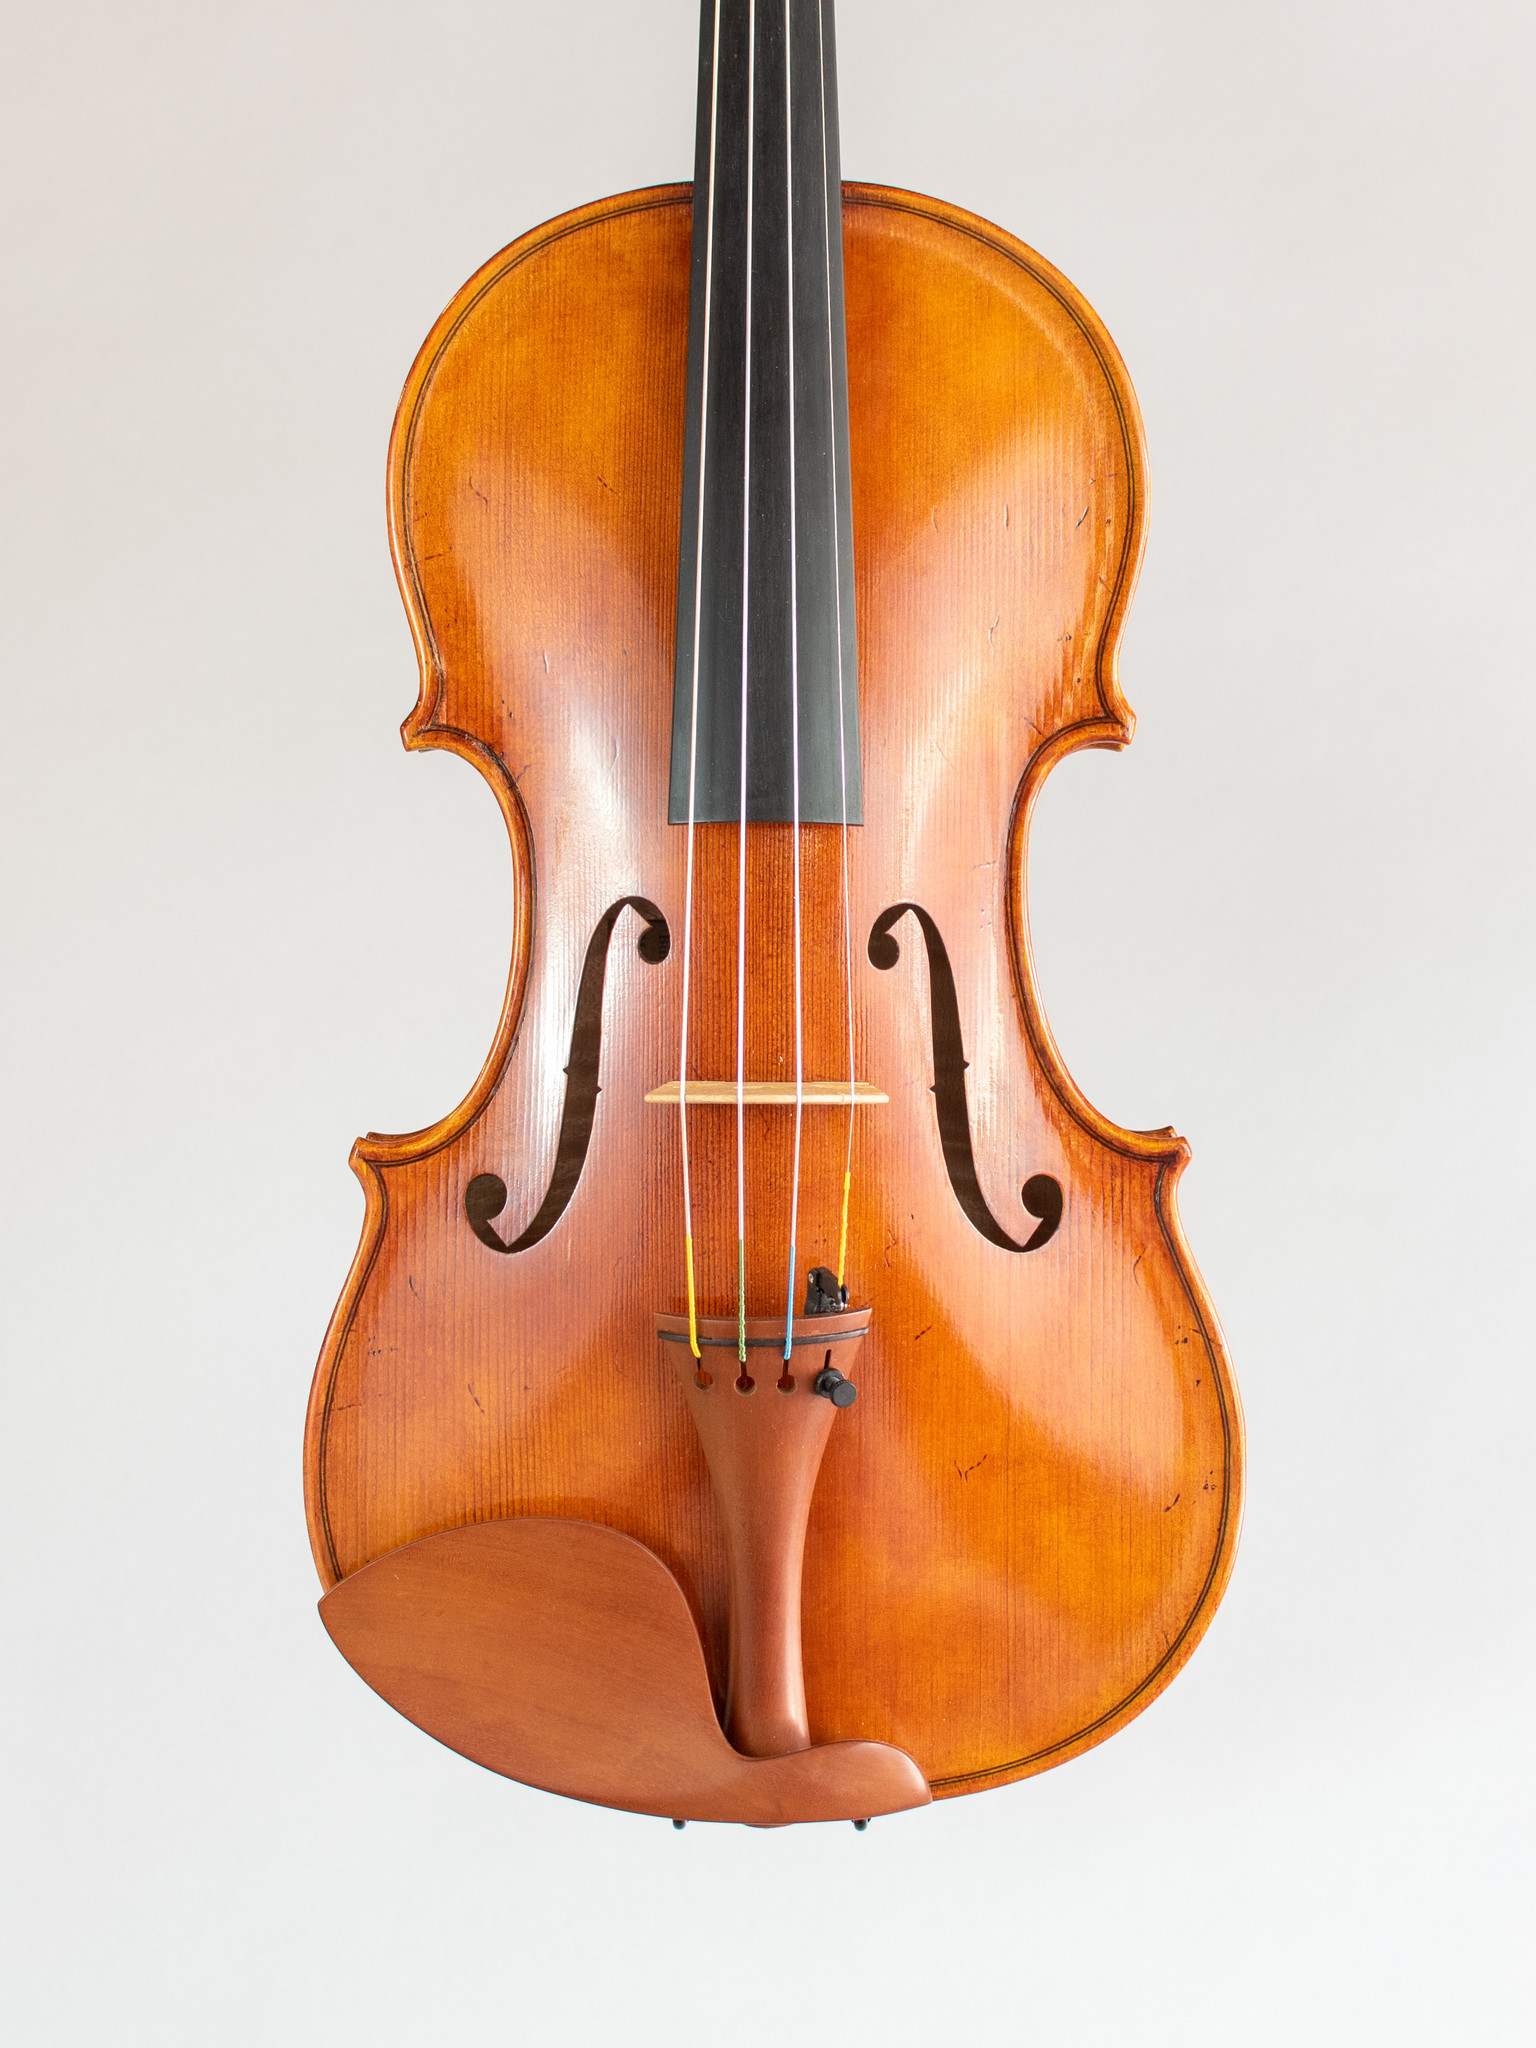 Bin Li violin, "Winter Sweet" limited edition, Guarneri model, No. 8-16-G, 2022, Beijing